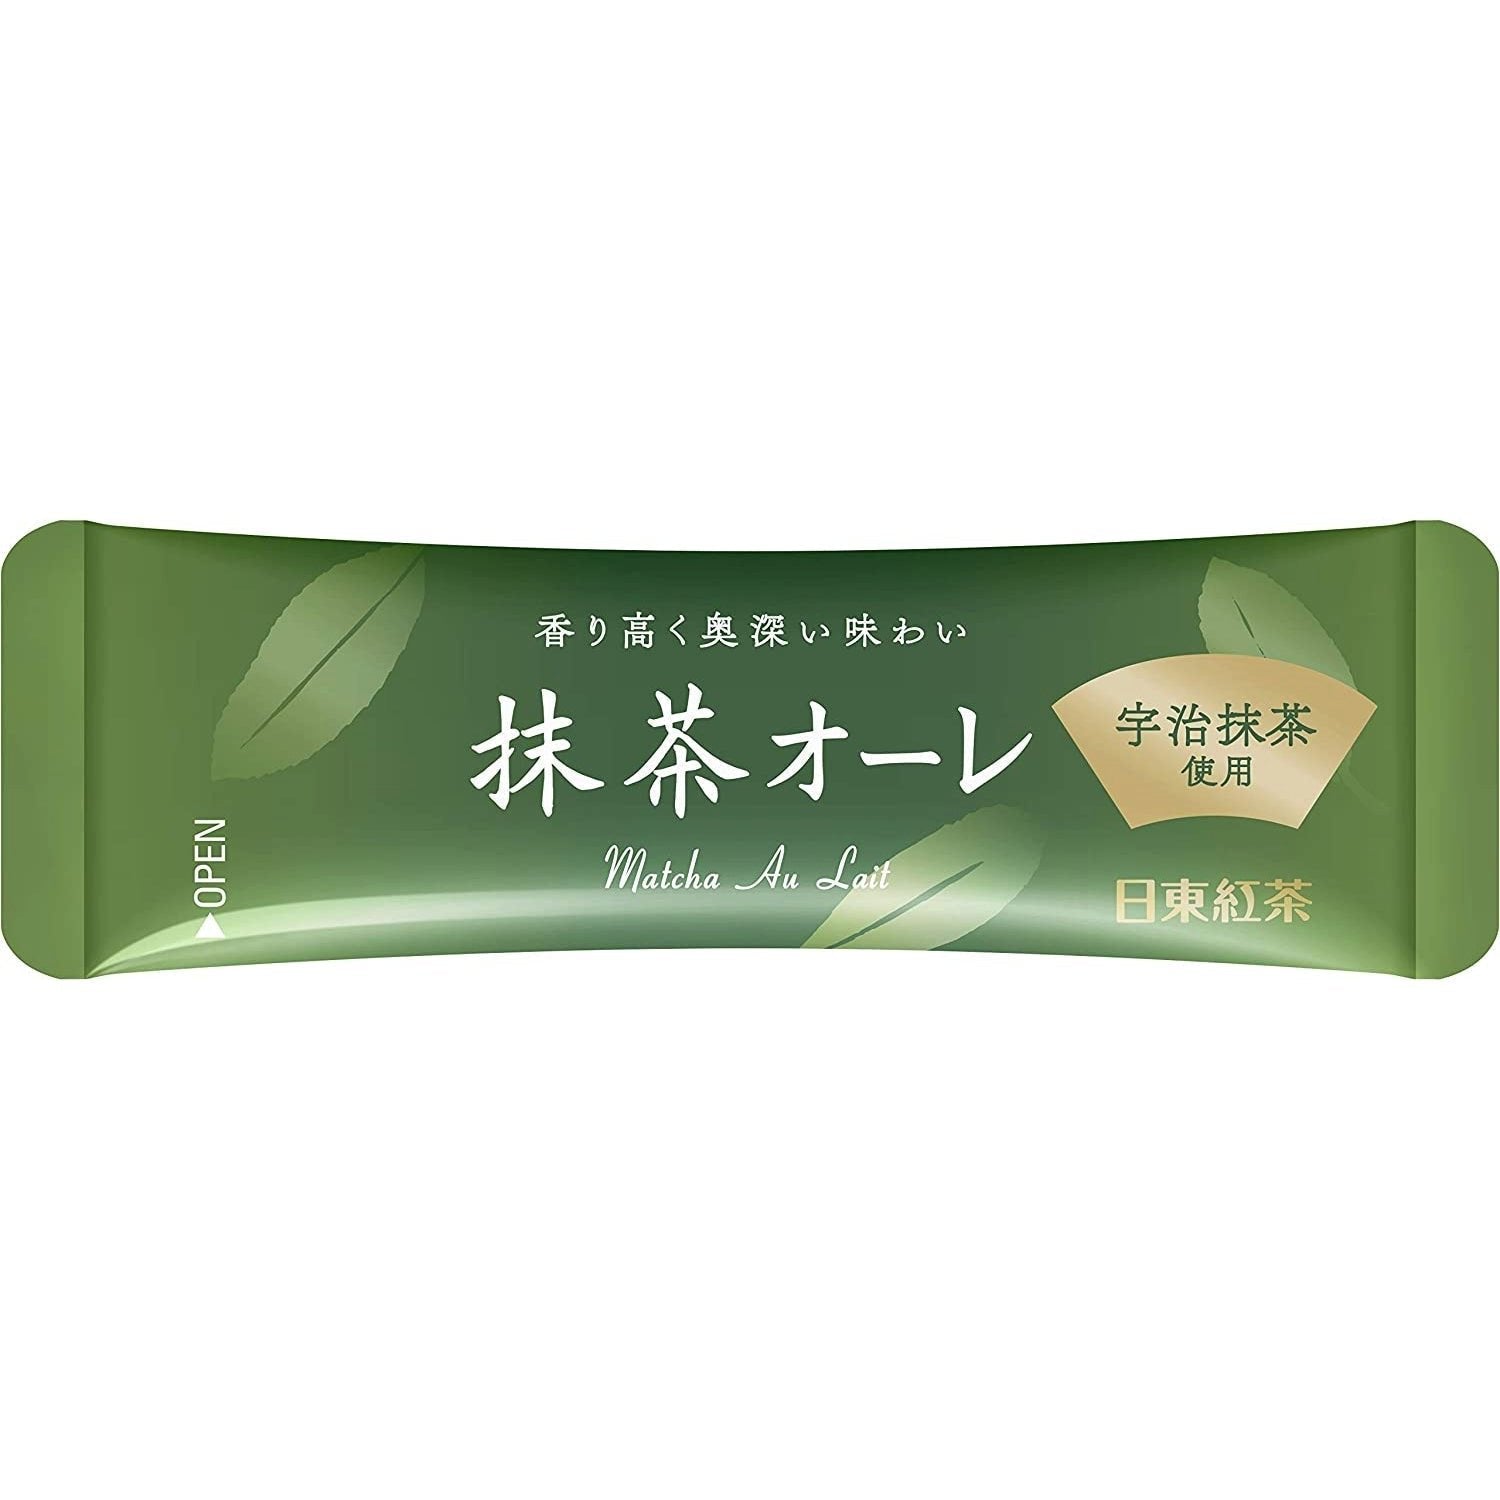 Nittoh Tea Matcha Green Tea Latte Powder (Matcha Au Lait) 8 Sticks